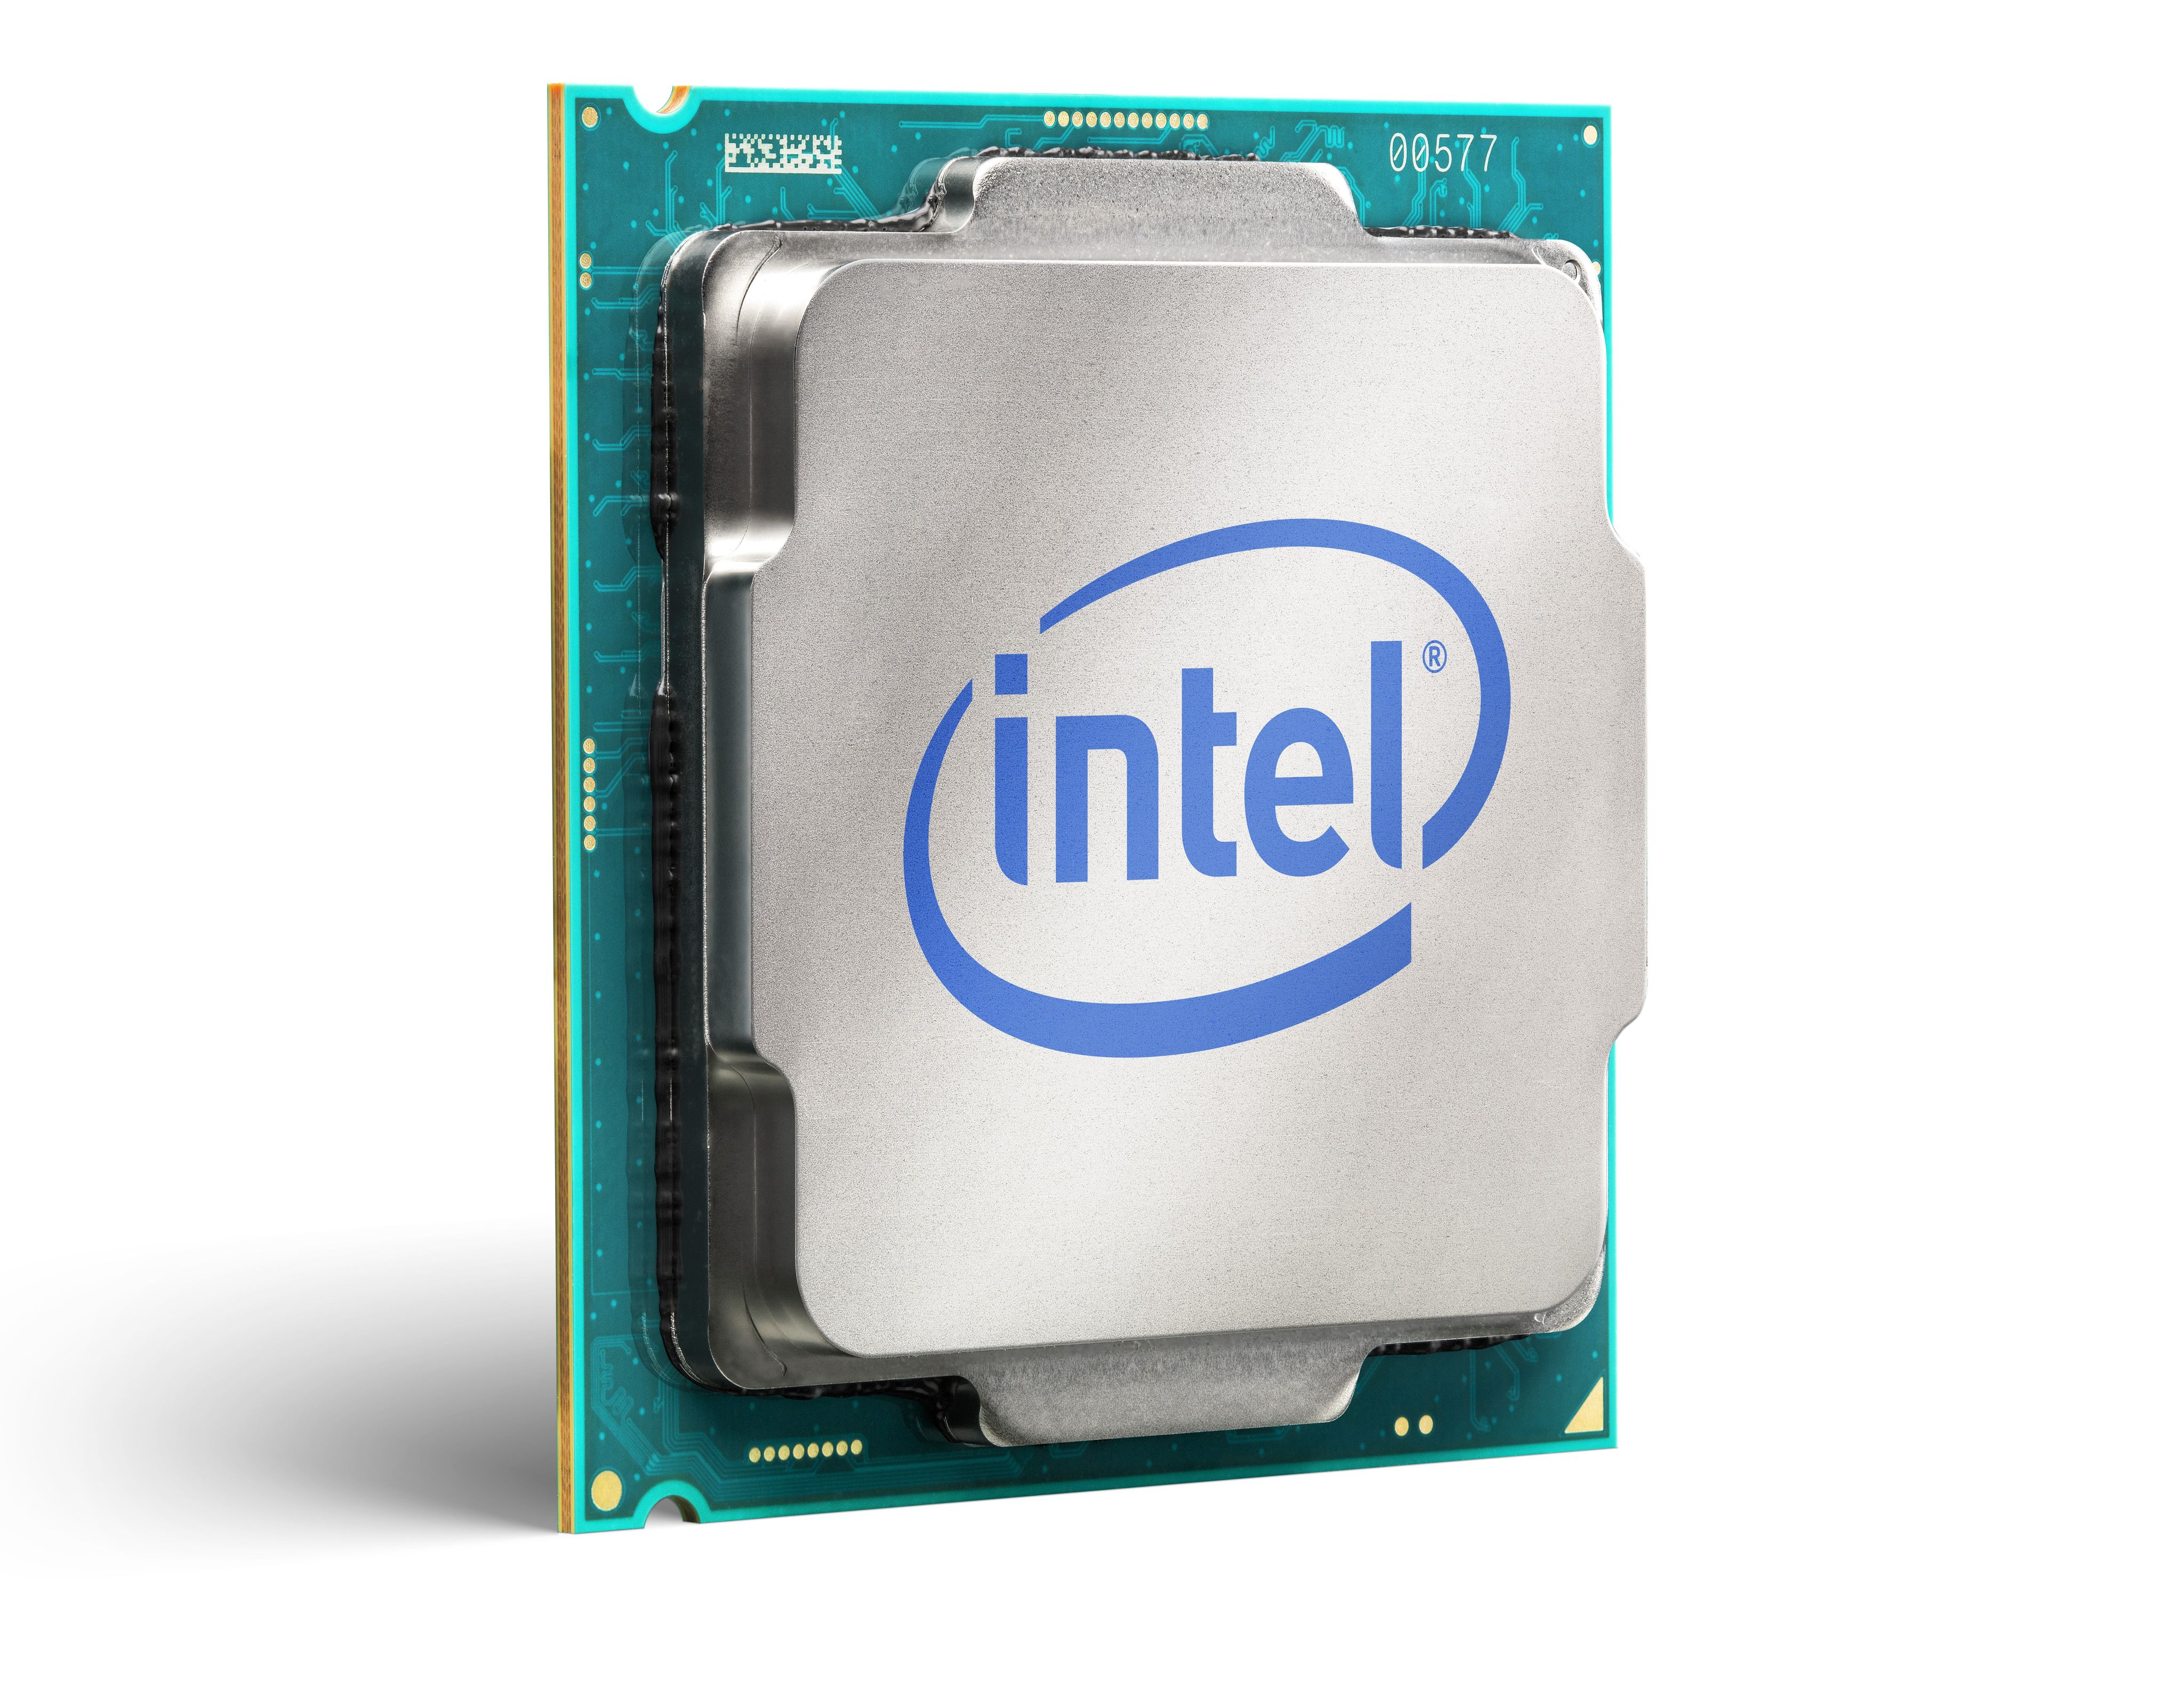 Подобрать процессор intel. Процессор Intel Xeon e5-1680v3 Haswell-Ep. Процессор Intel Xeon e5-2623v3. Процессор CPU Intel Core i7. Intel Pentium Core i7.